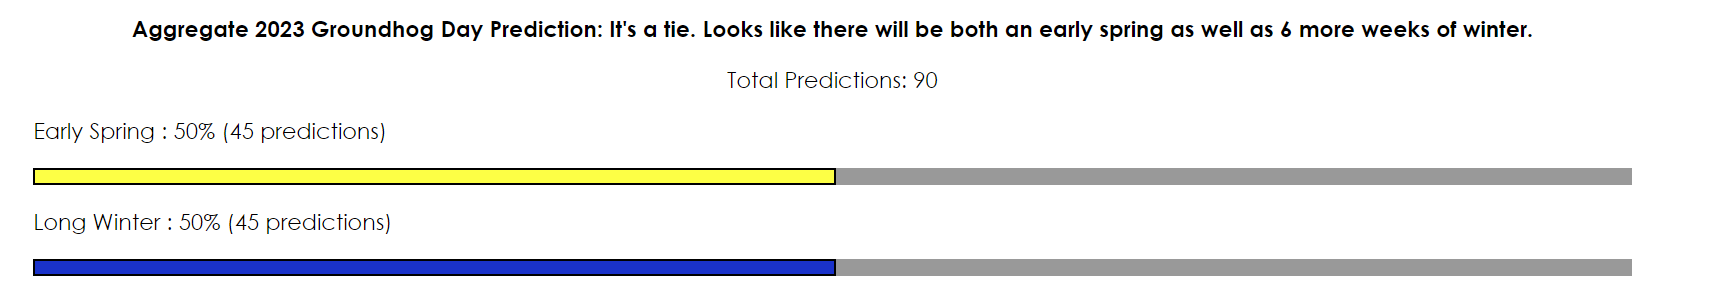 Groundhog Day 2023 predictions